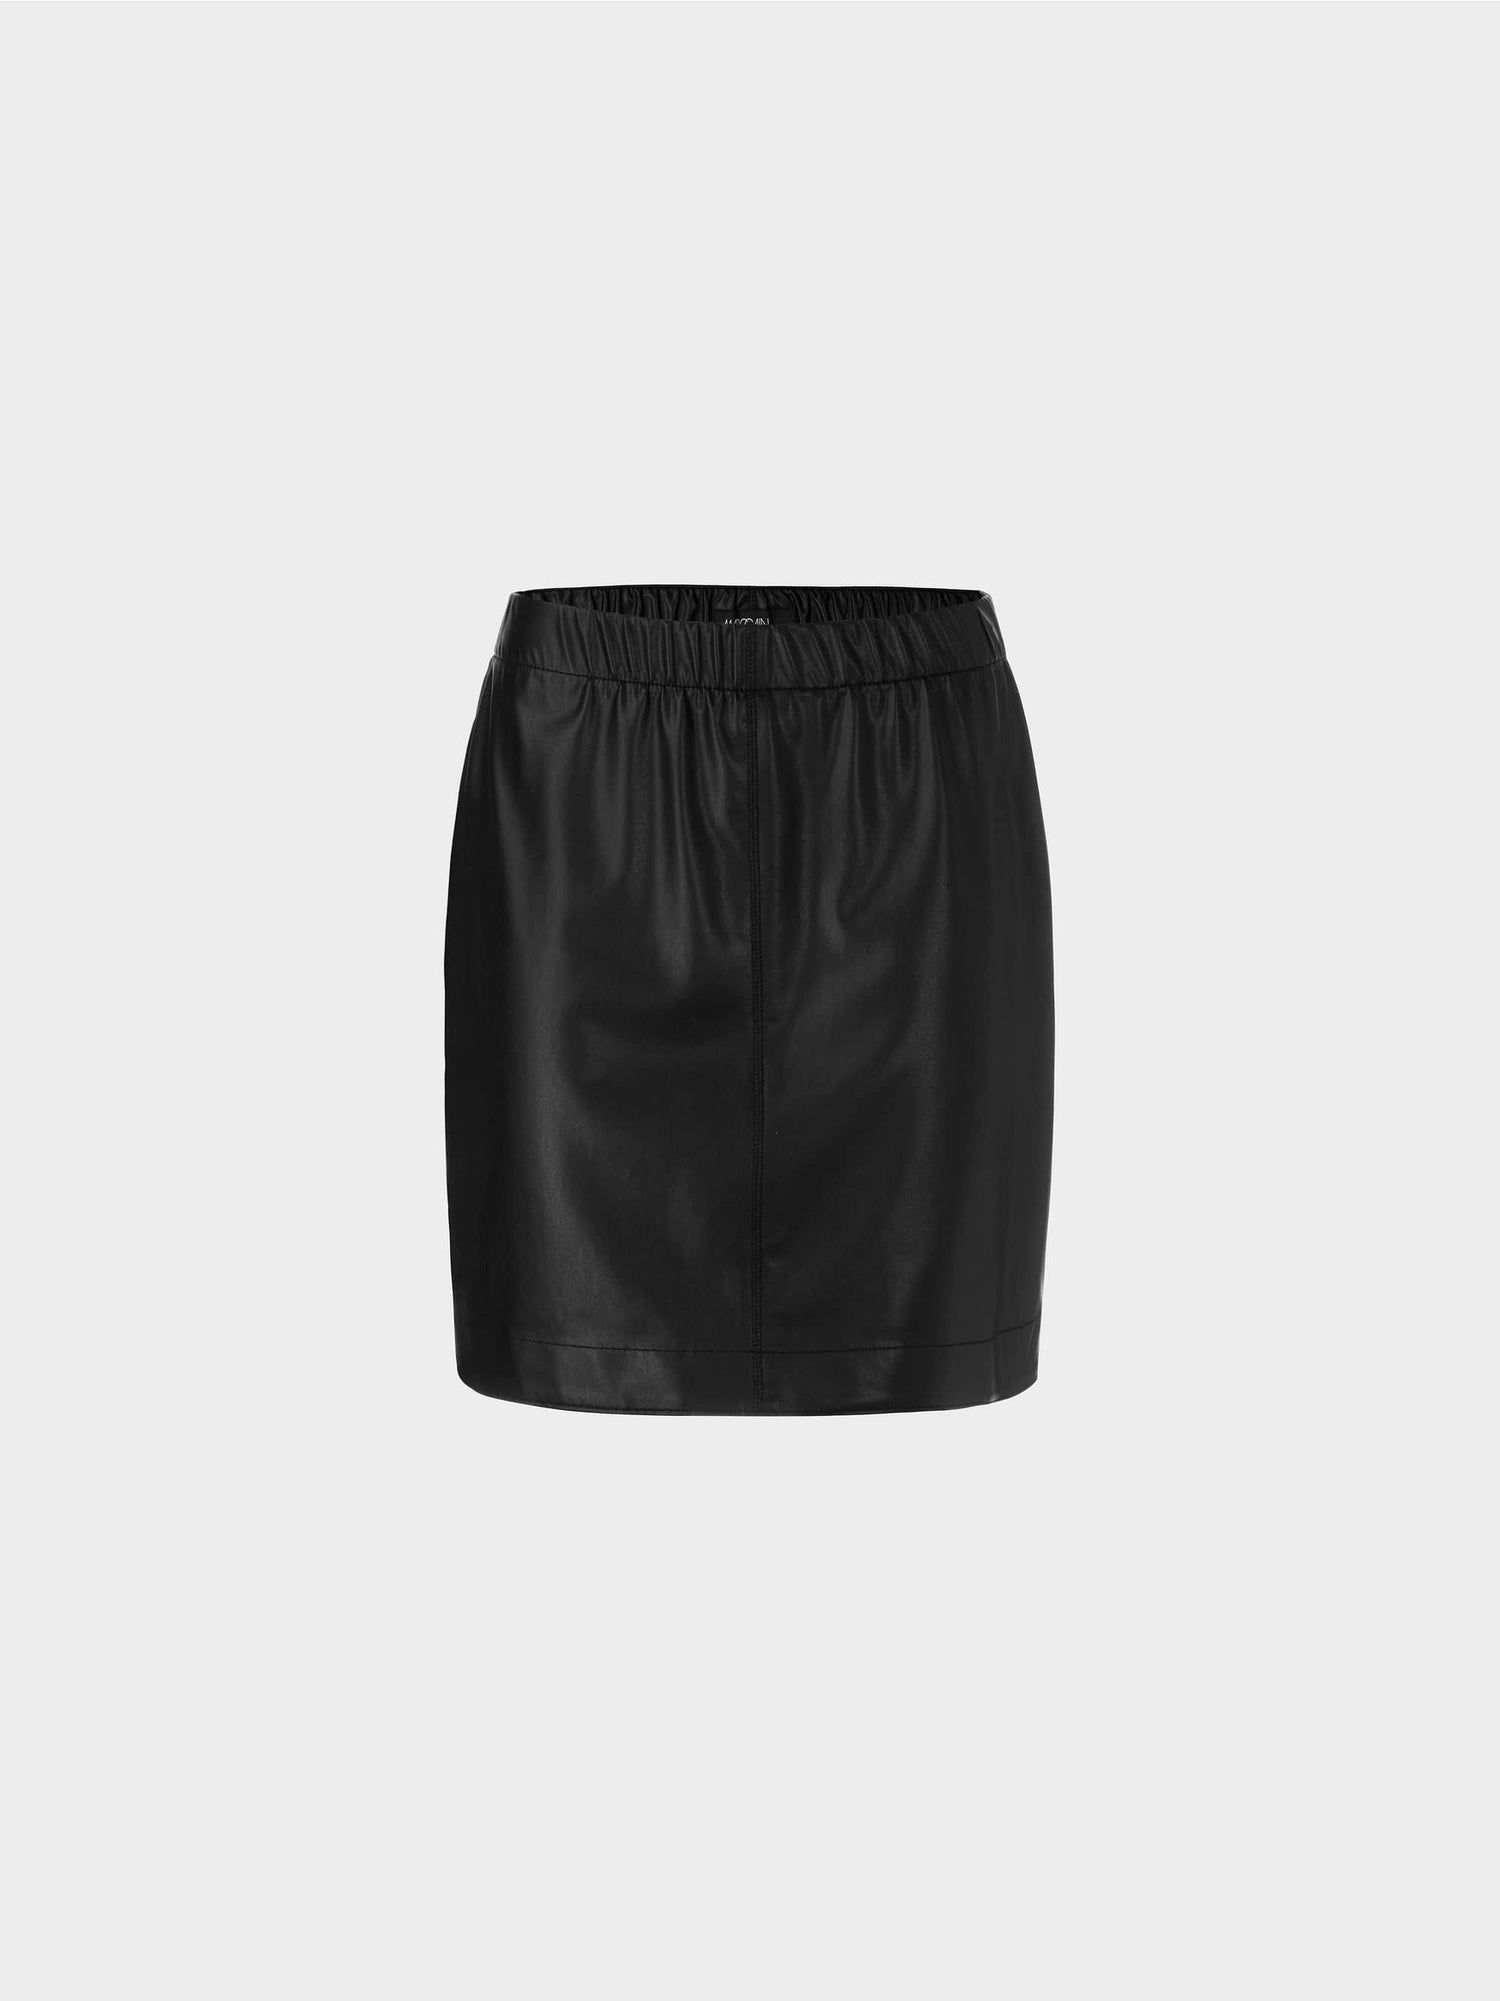 Short Skirt In Fun Leather_VS 31.06 J06_900_06